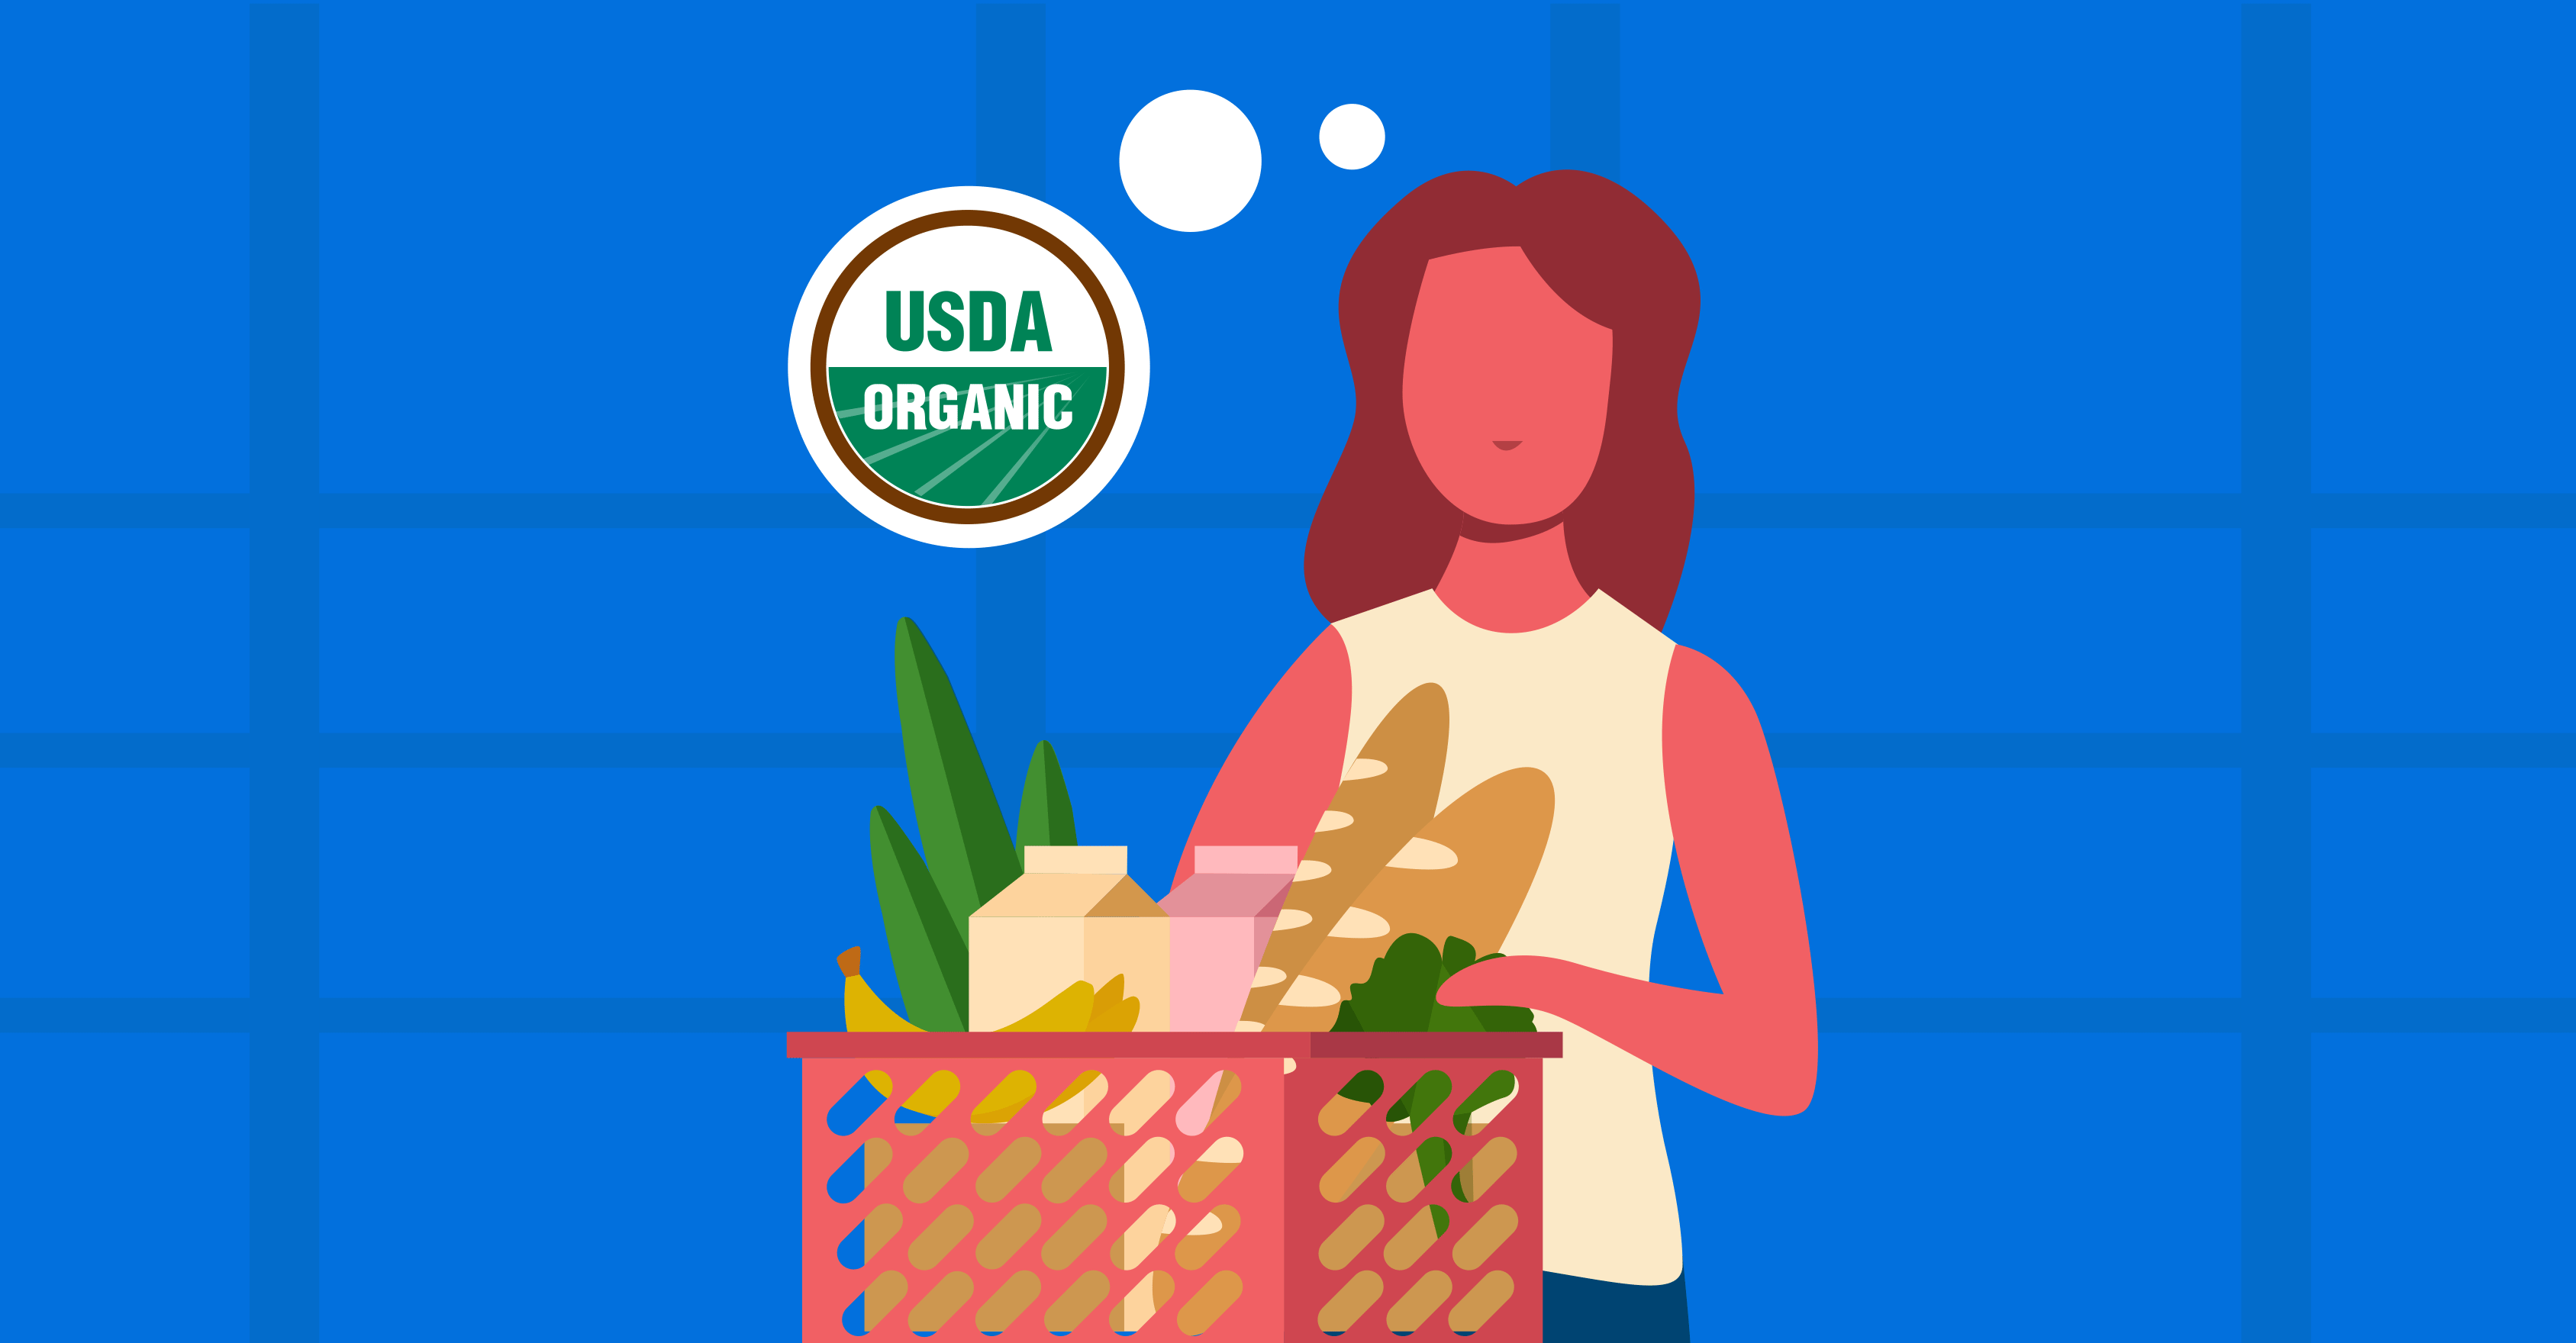 woman with shopping basket thinking of "USDA Organic" foods